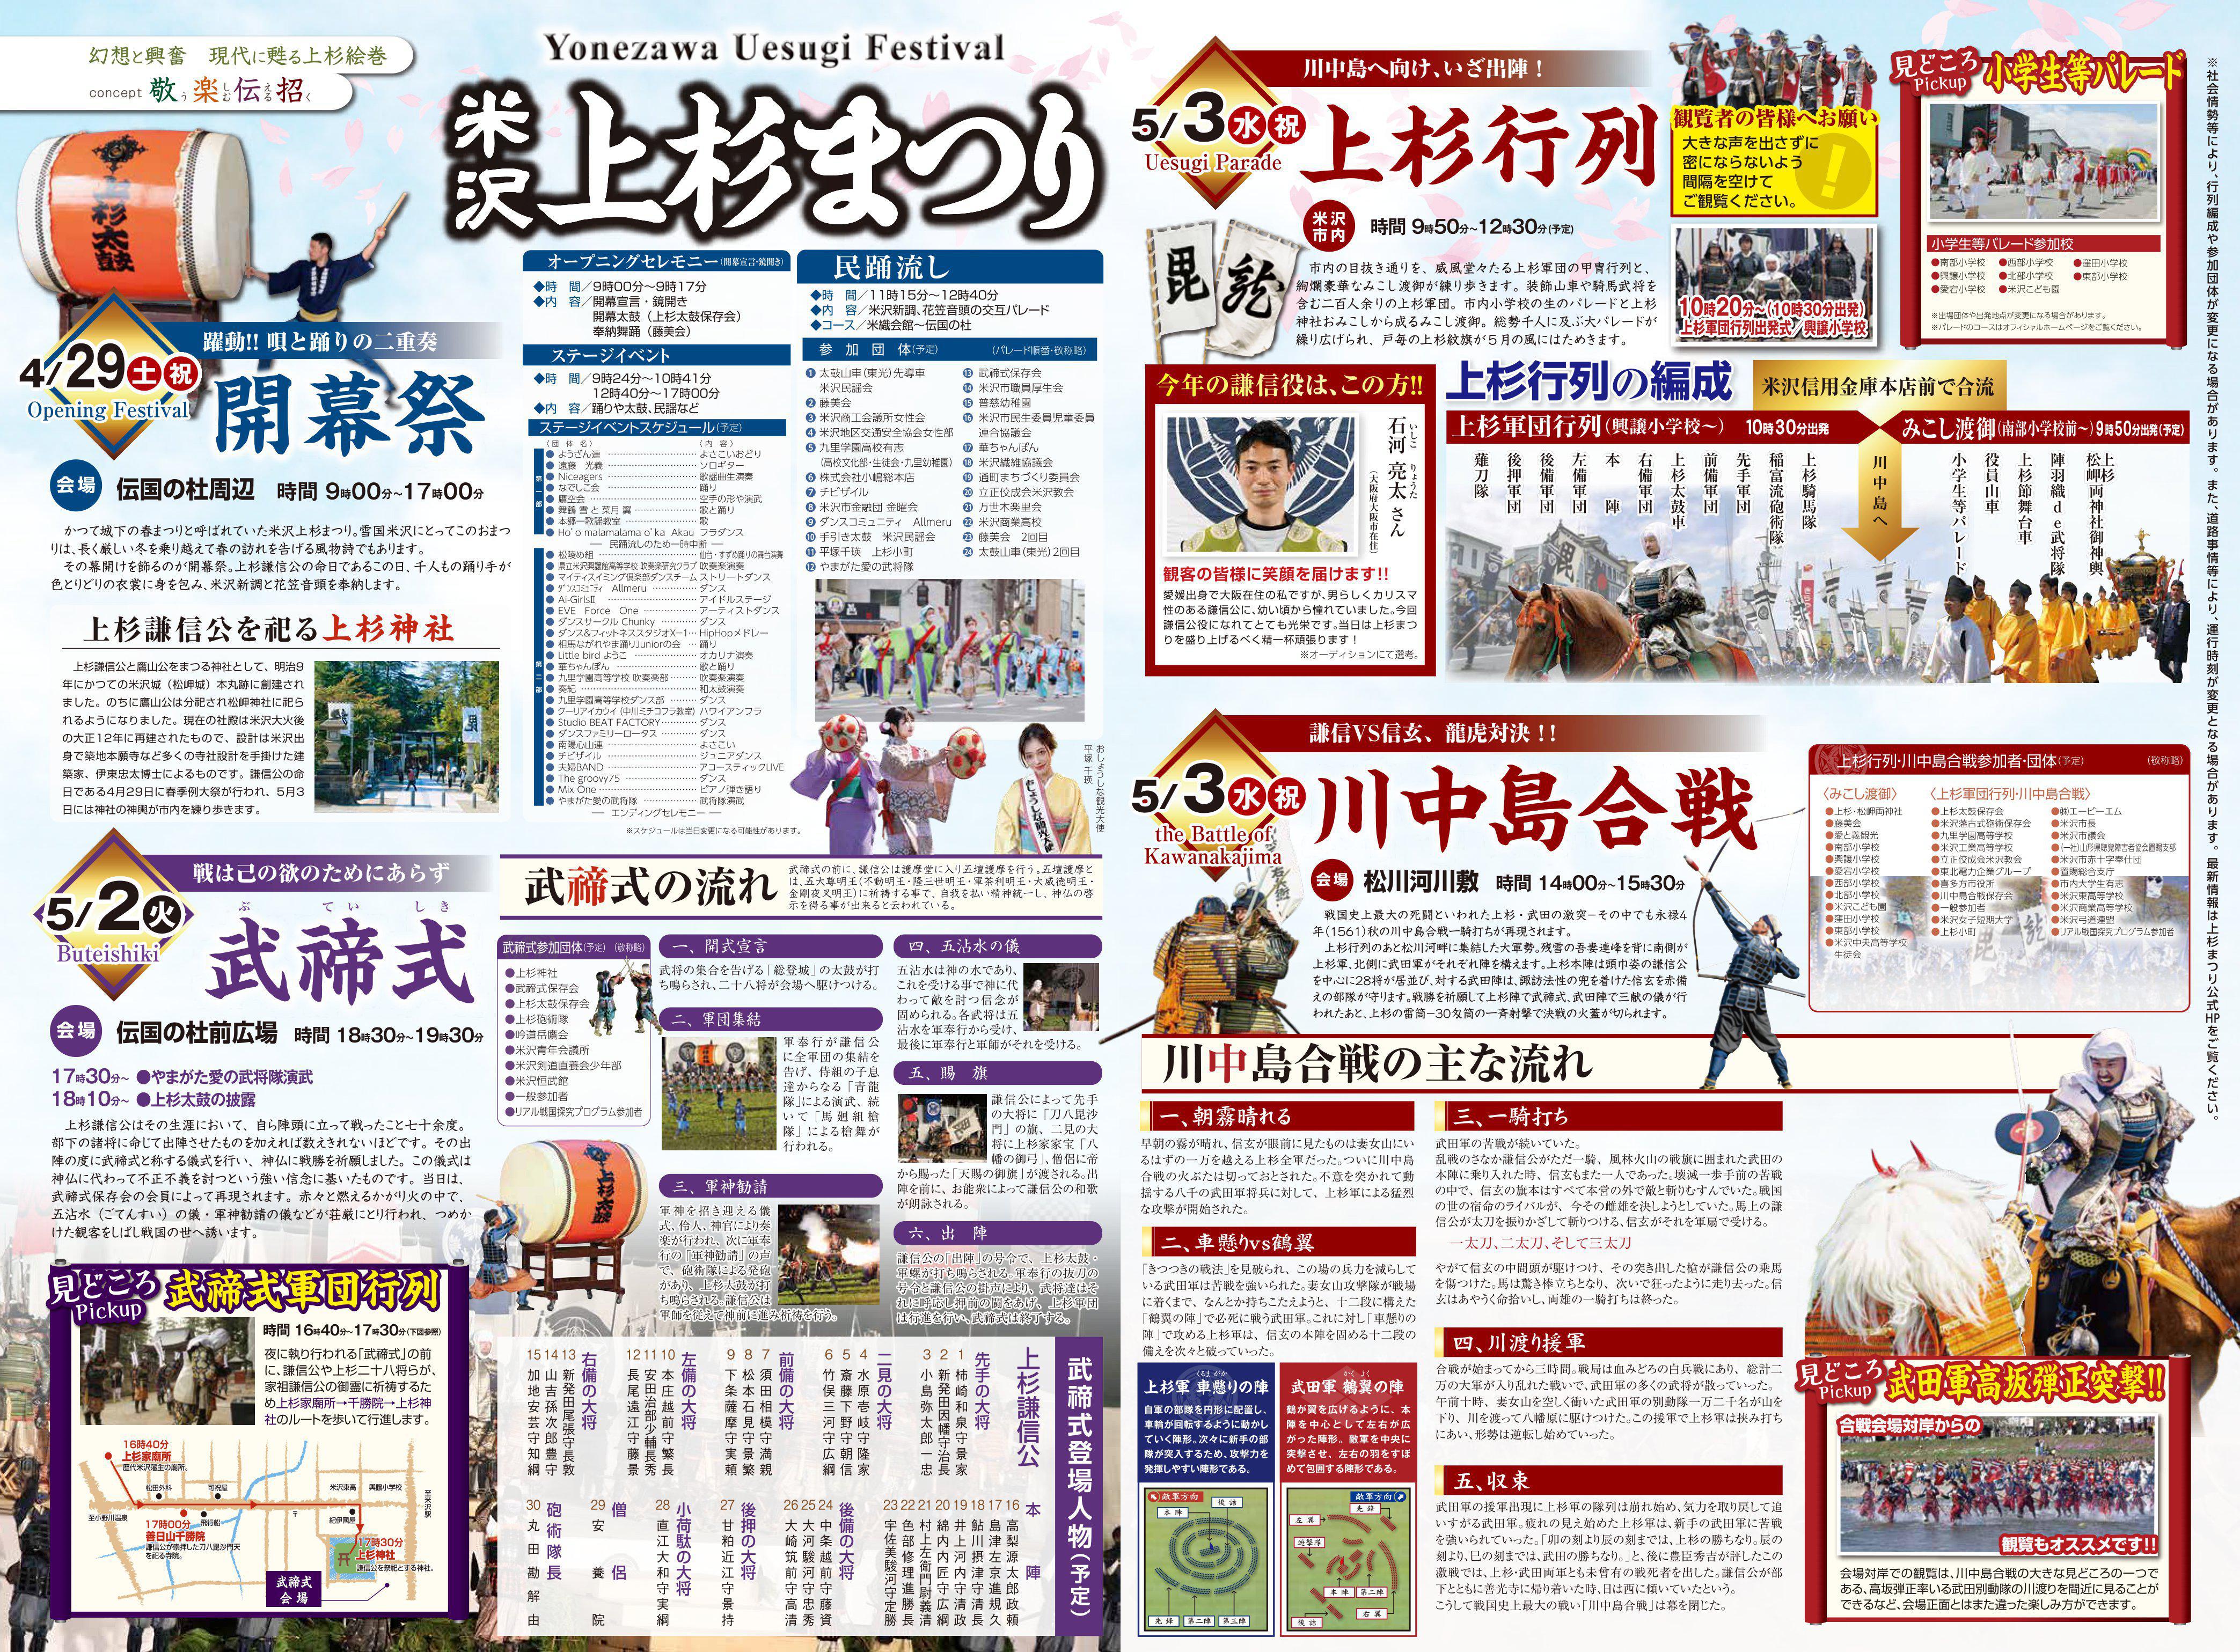 Yonezawa Uesugi Festival - Important Information